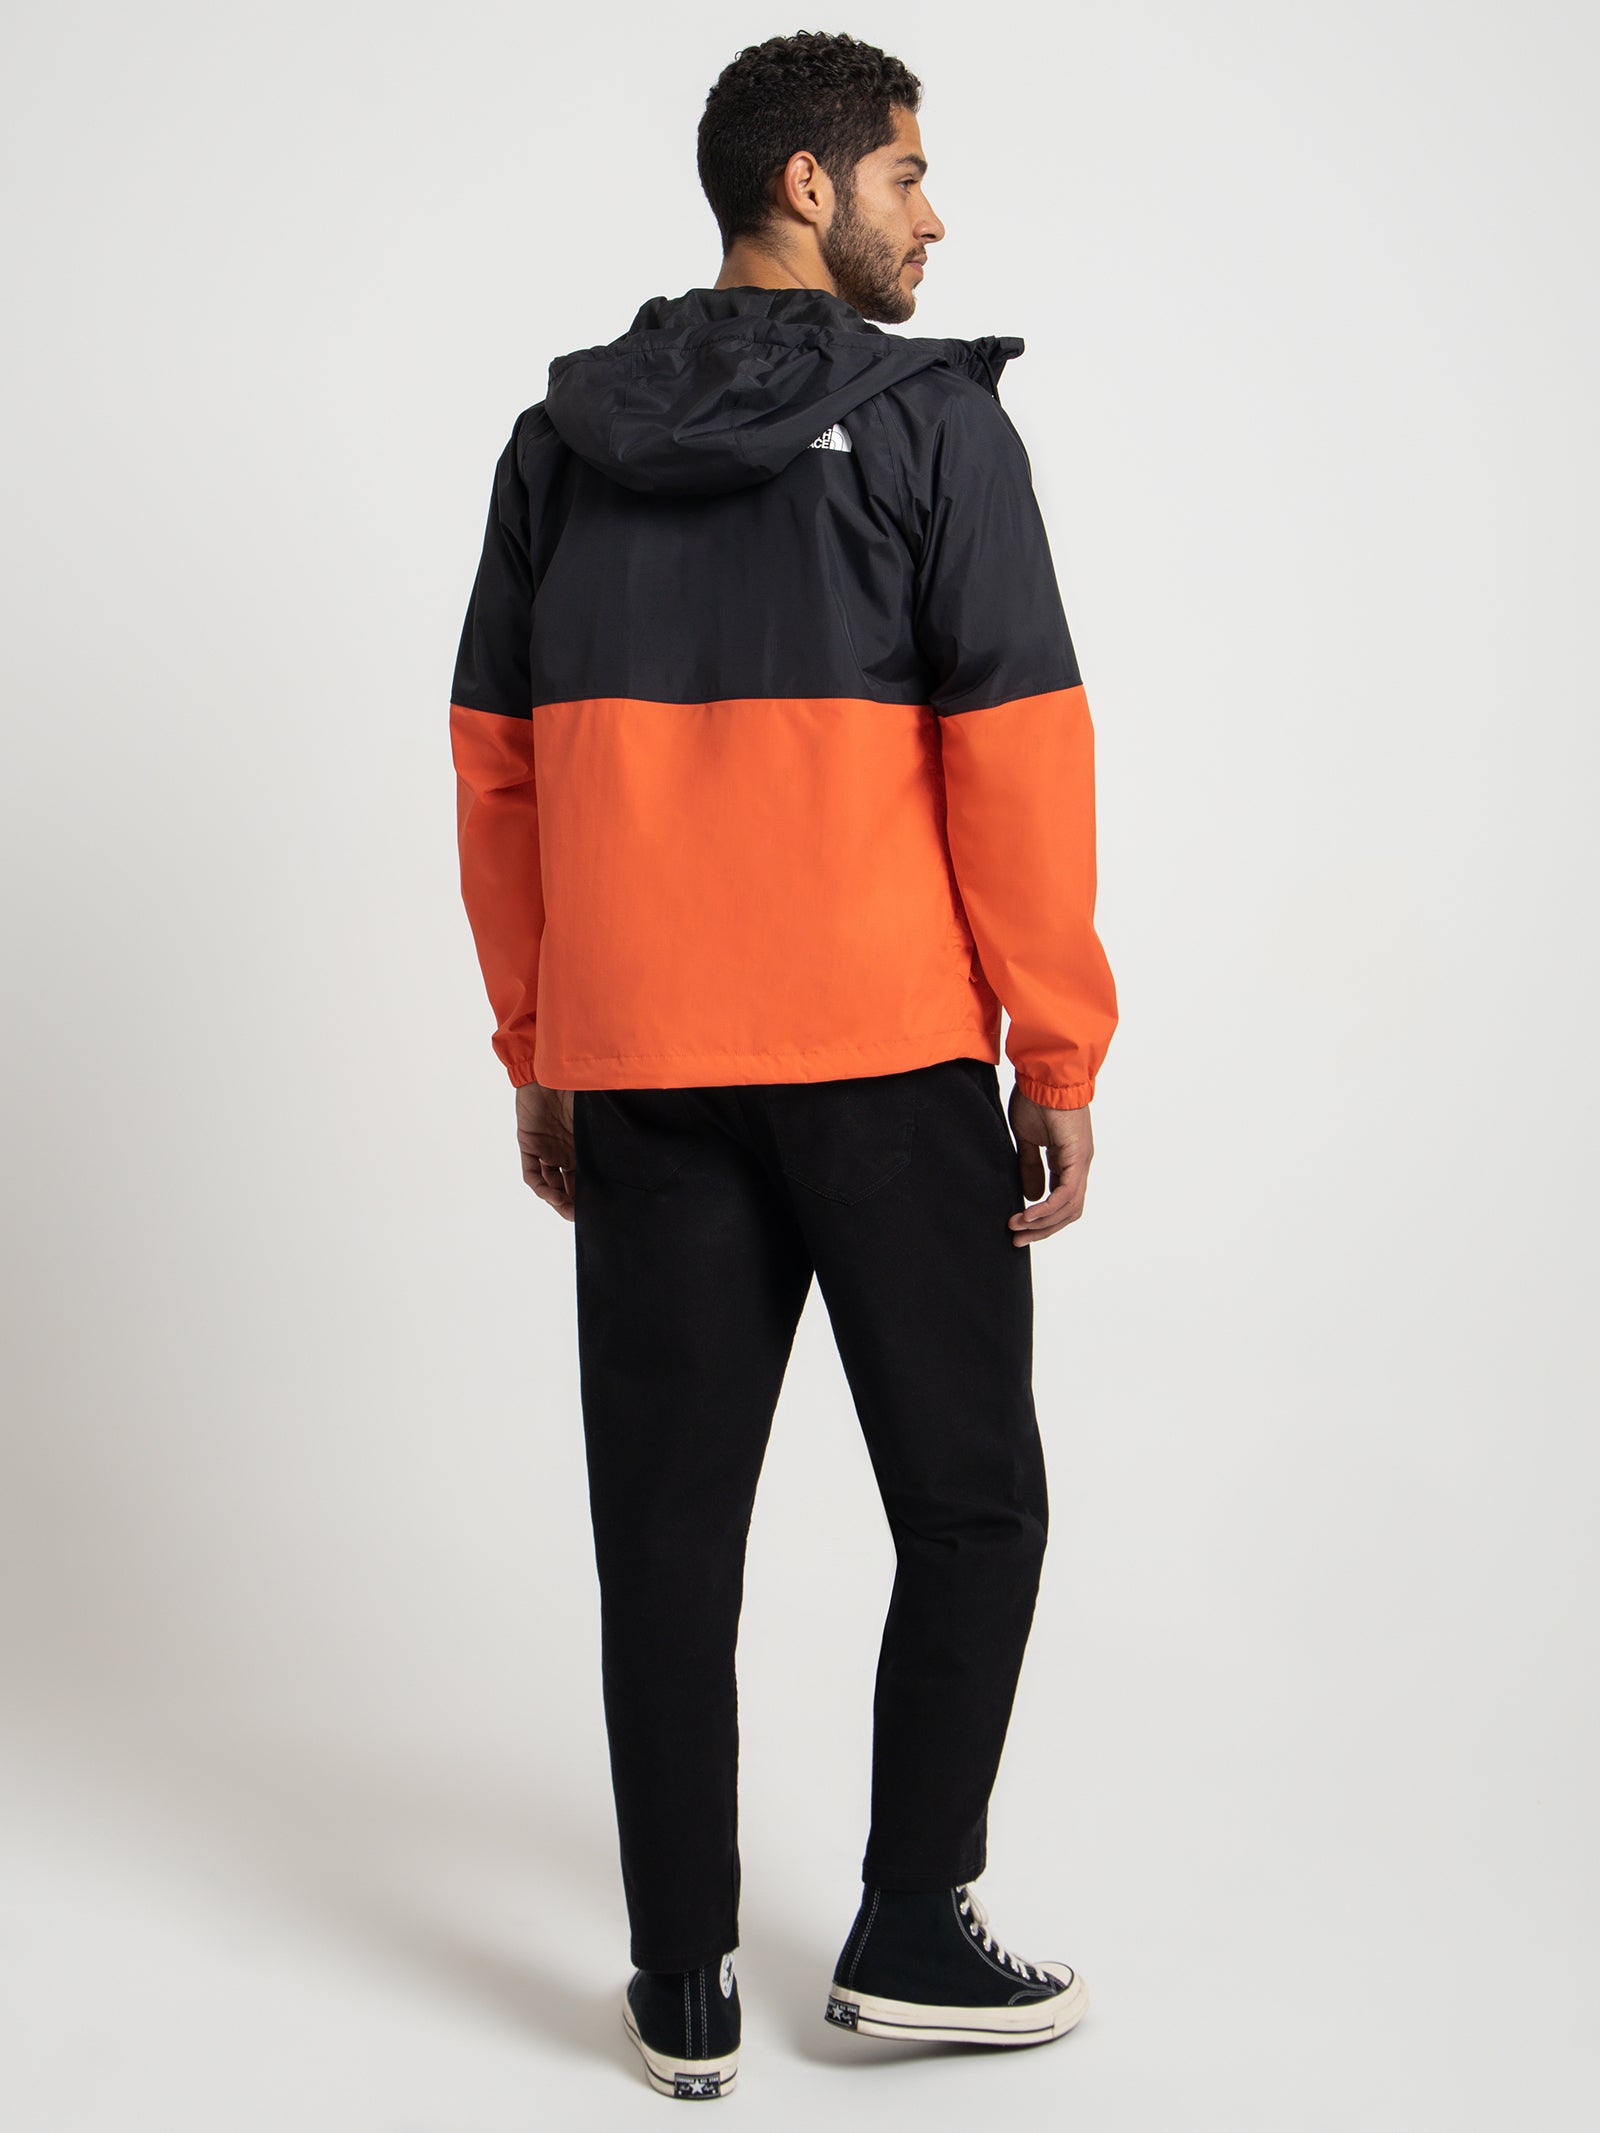 Antora Rain Jacket in Black & Orange